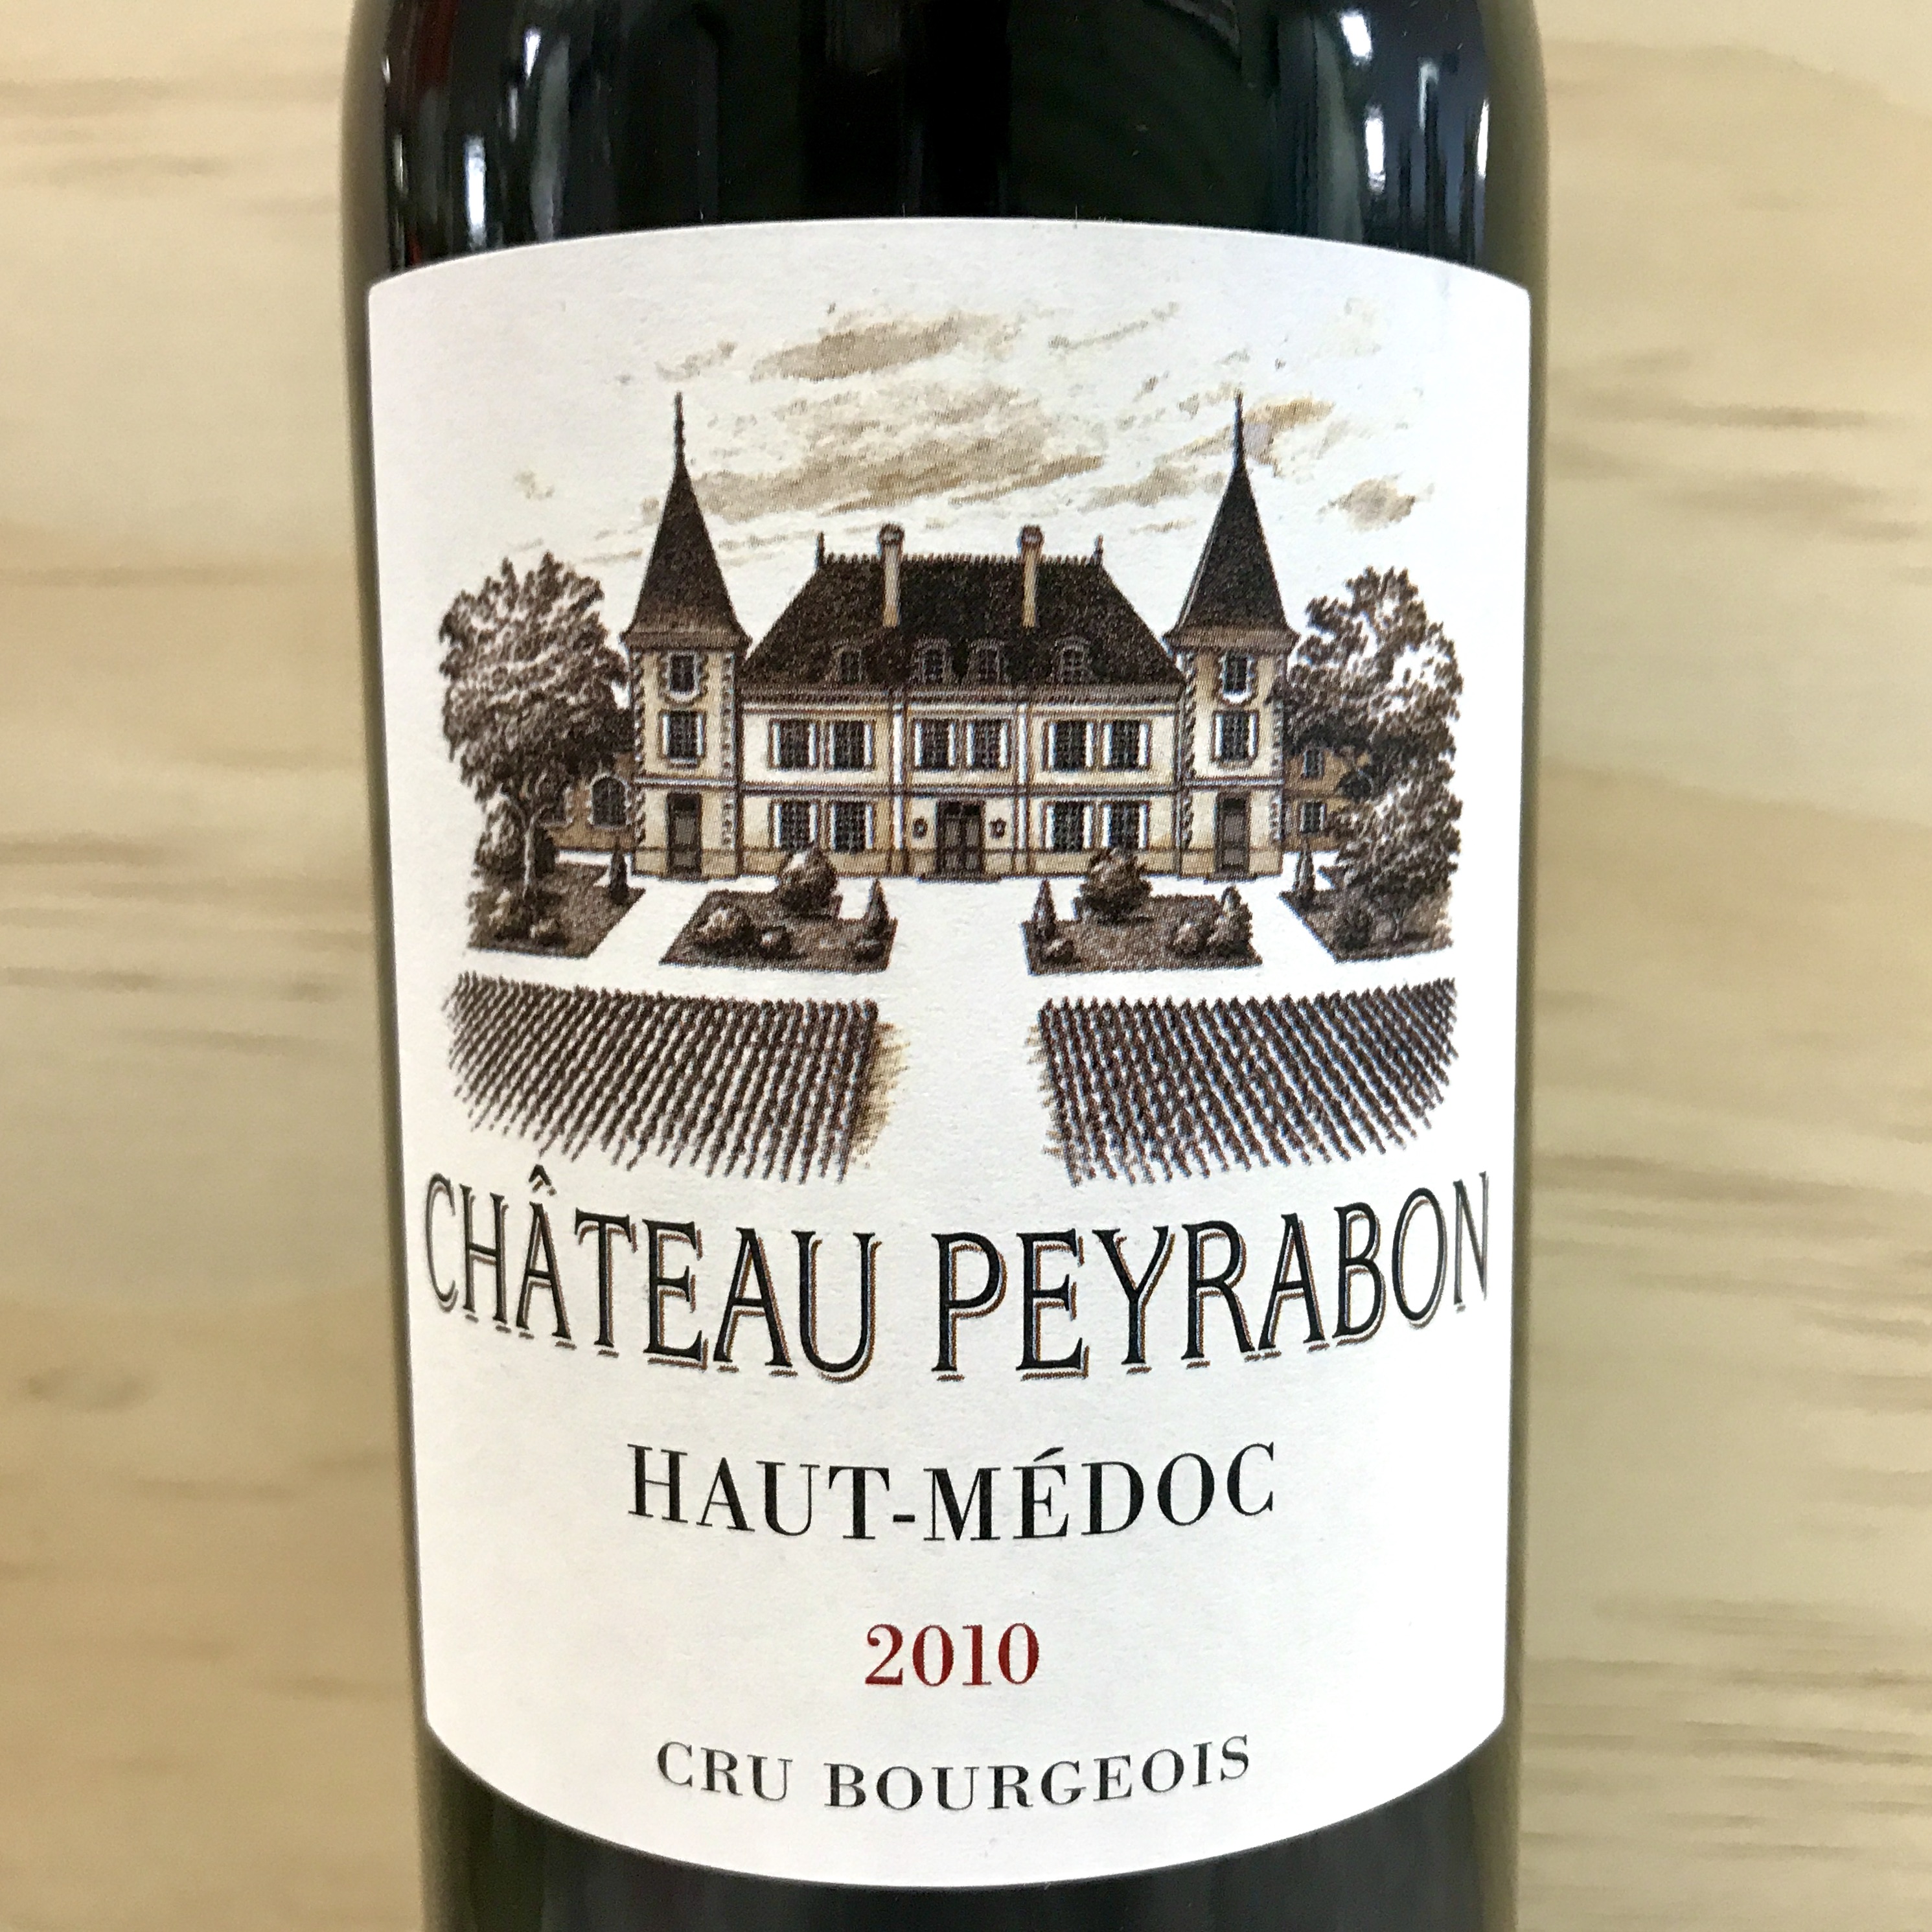 Chateau Peyrabon Haut-Medoc Cru Bourgeois 2010